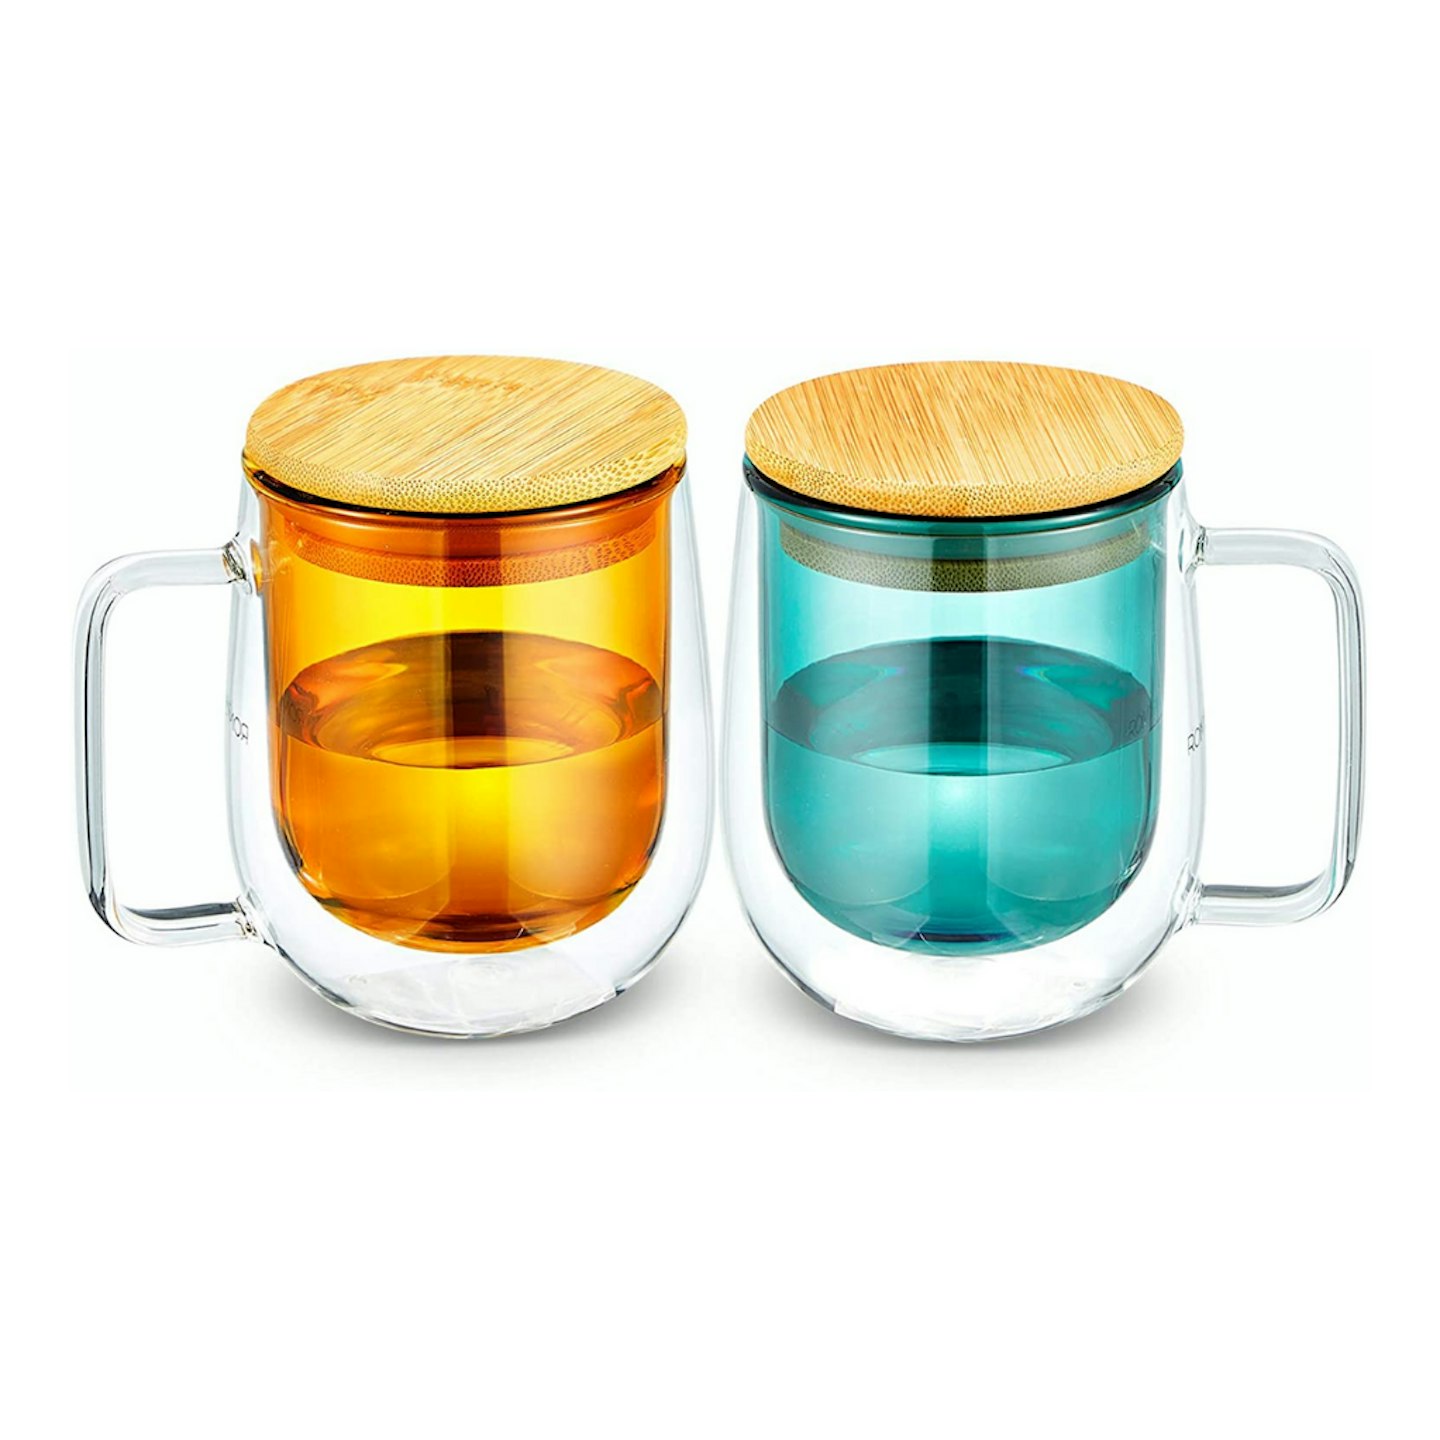 ROIMTEA Glass Tea Coffee Mug Set with Wood Lid